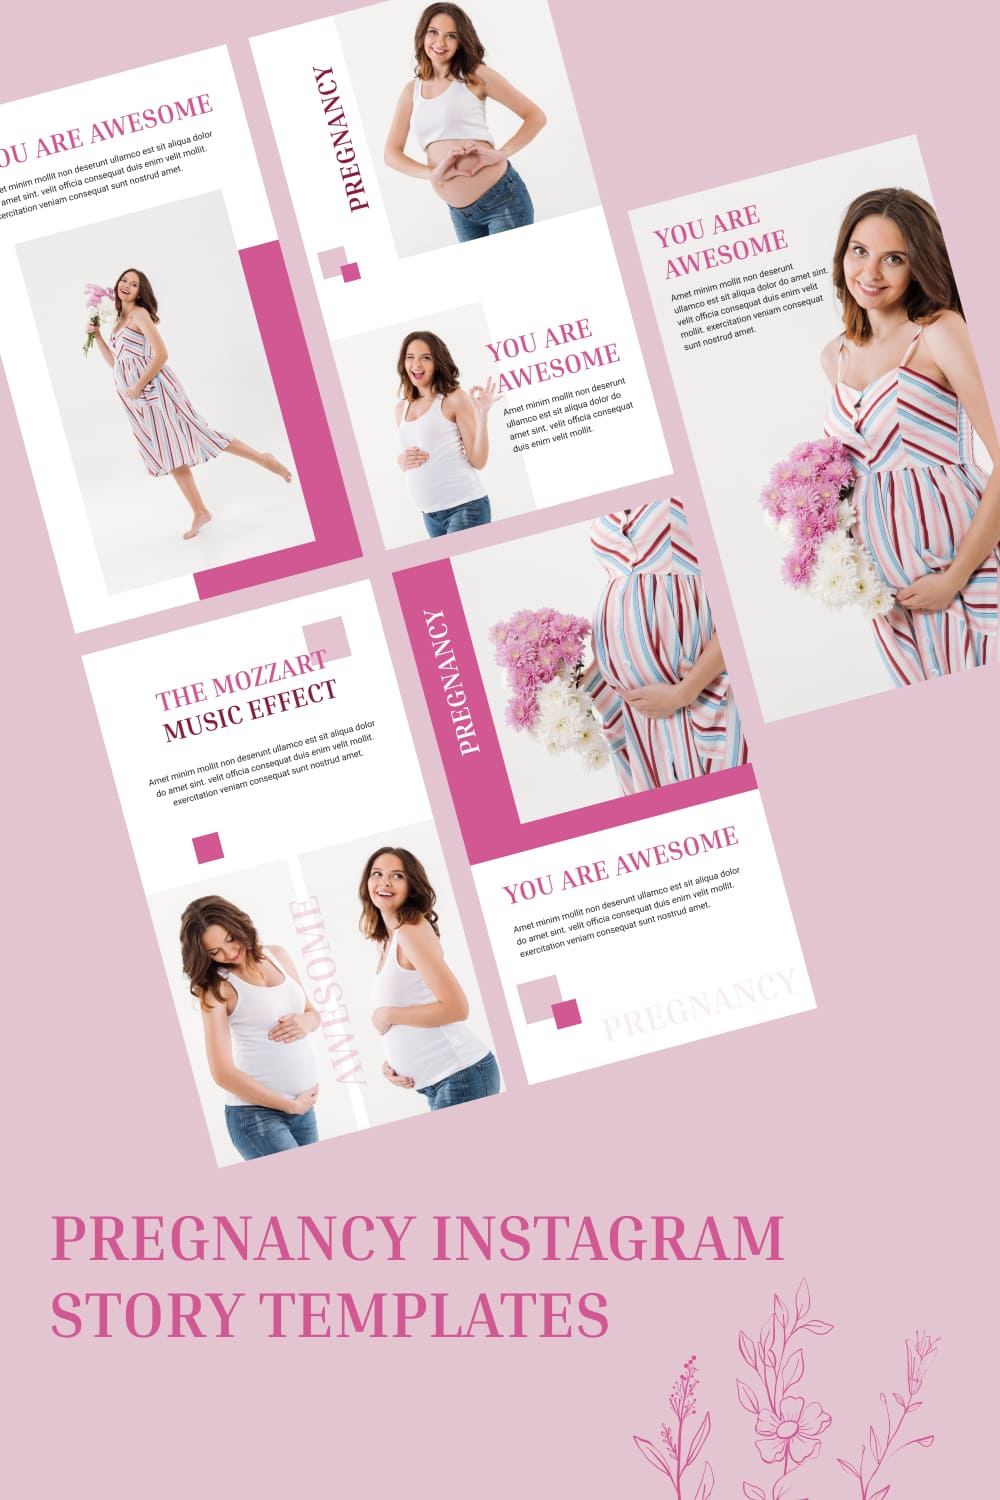 09 5 pregnancy instagram story templates 1000 1500 1